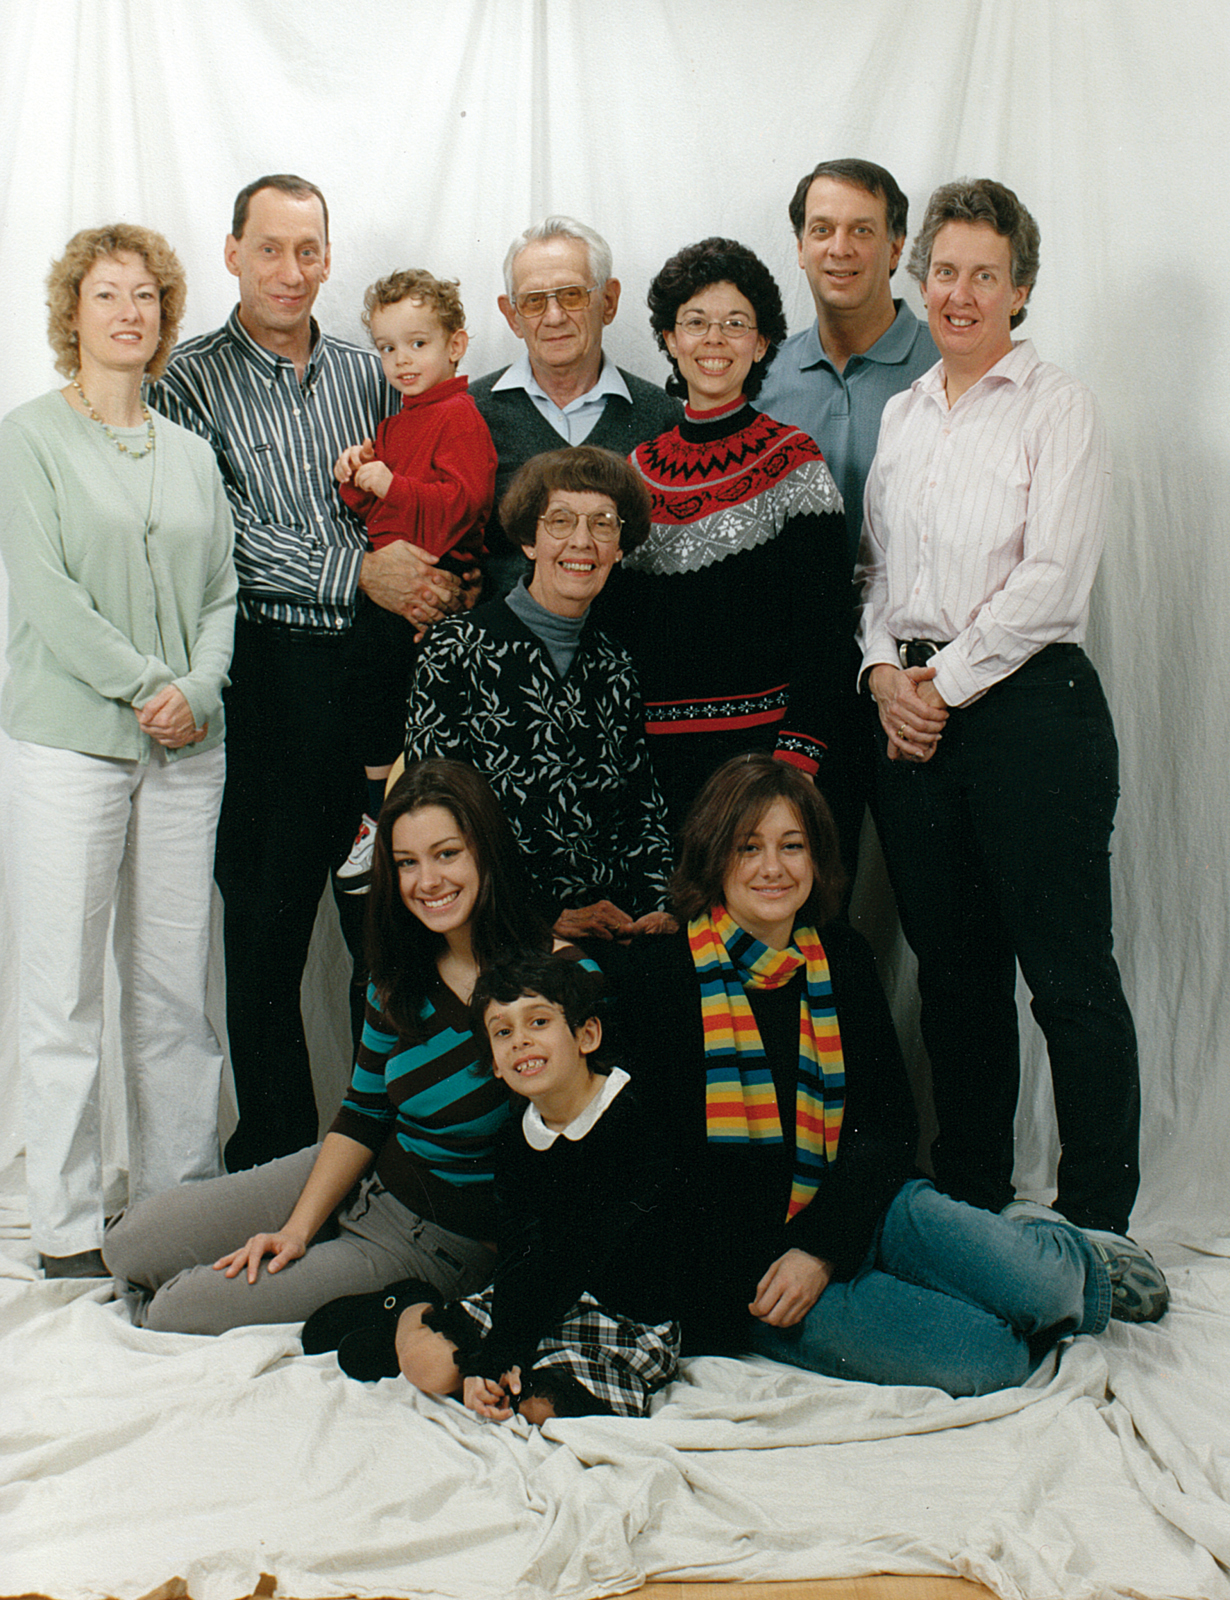 The family of John Bernheim in 2005 in the USA.